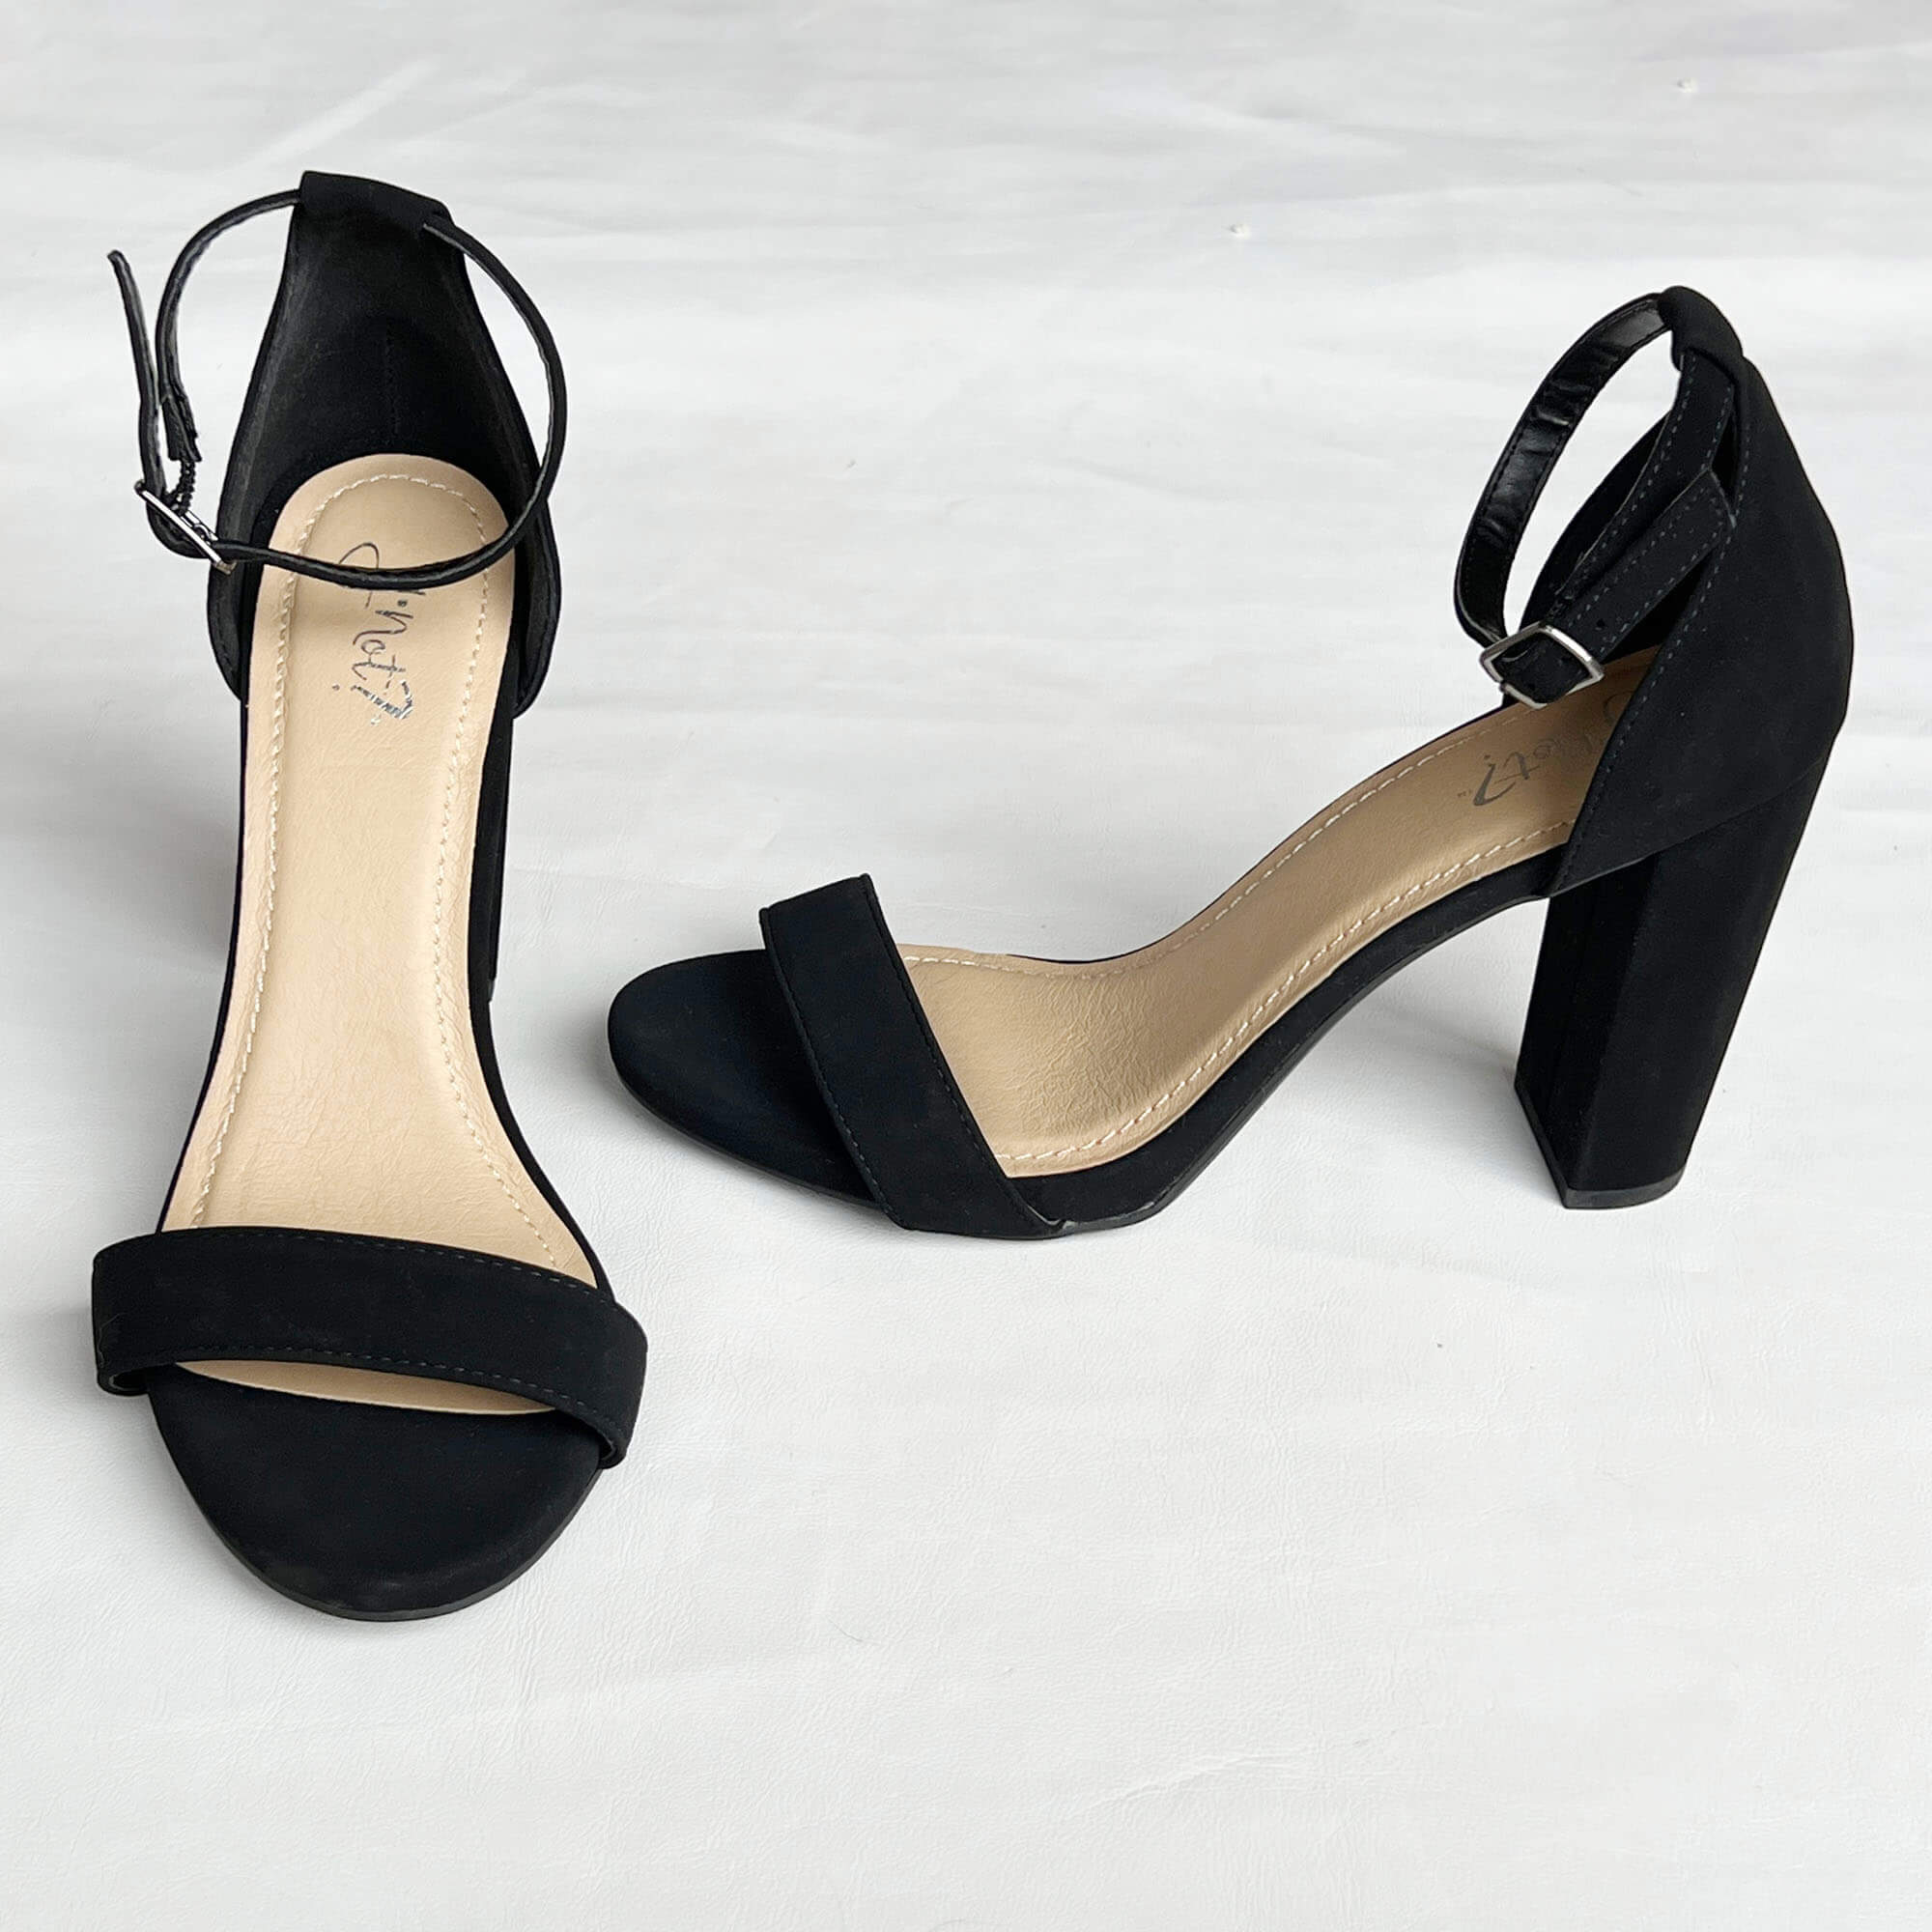 Brash Black Suede Heels Size 8.5 Sassy and Little Black Dress ready  Luxurious | eBay